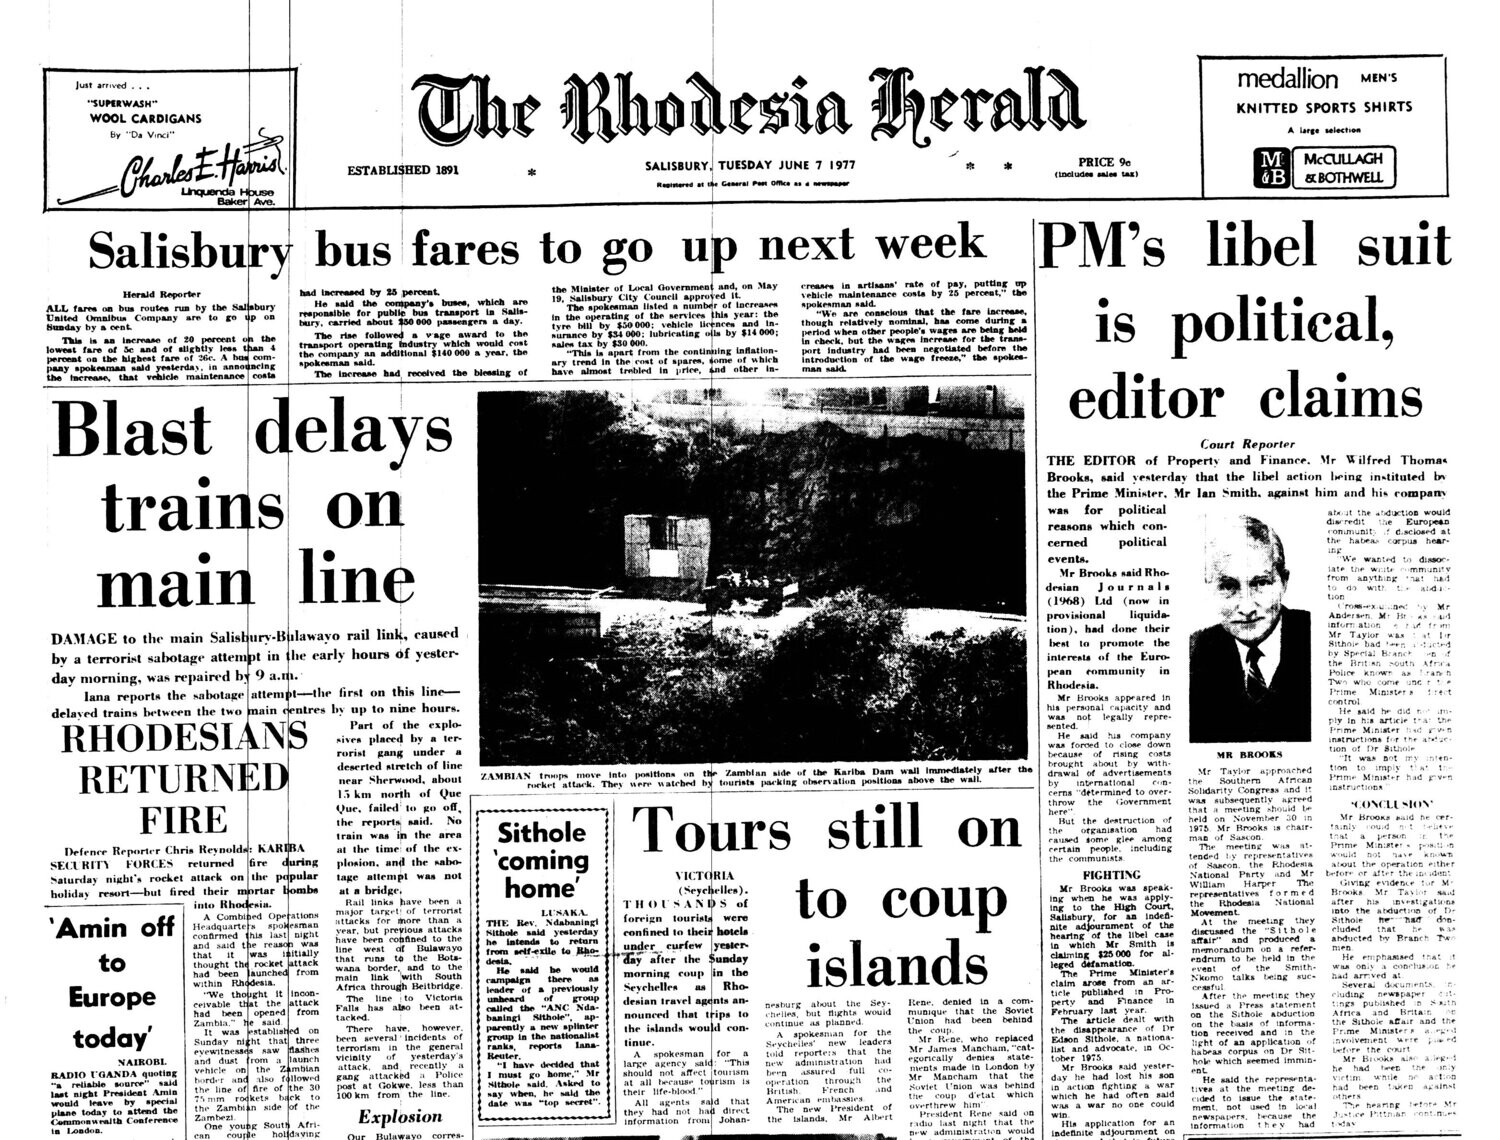 Rhodesia Herald - 7 June 1977